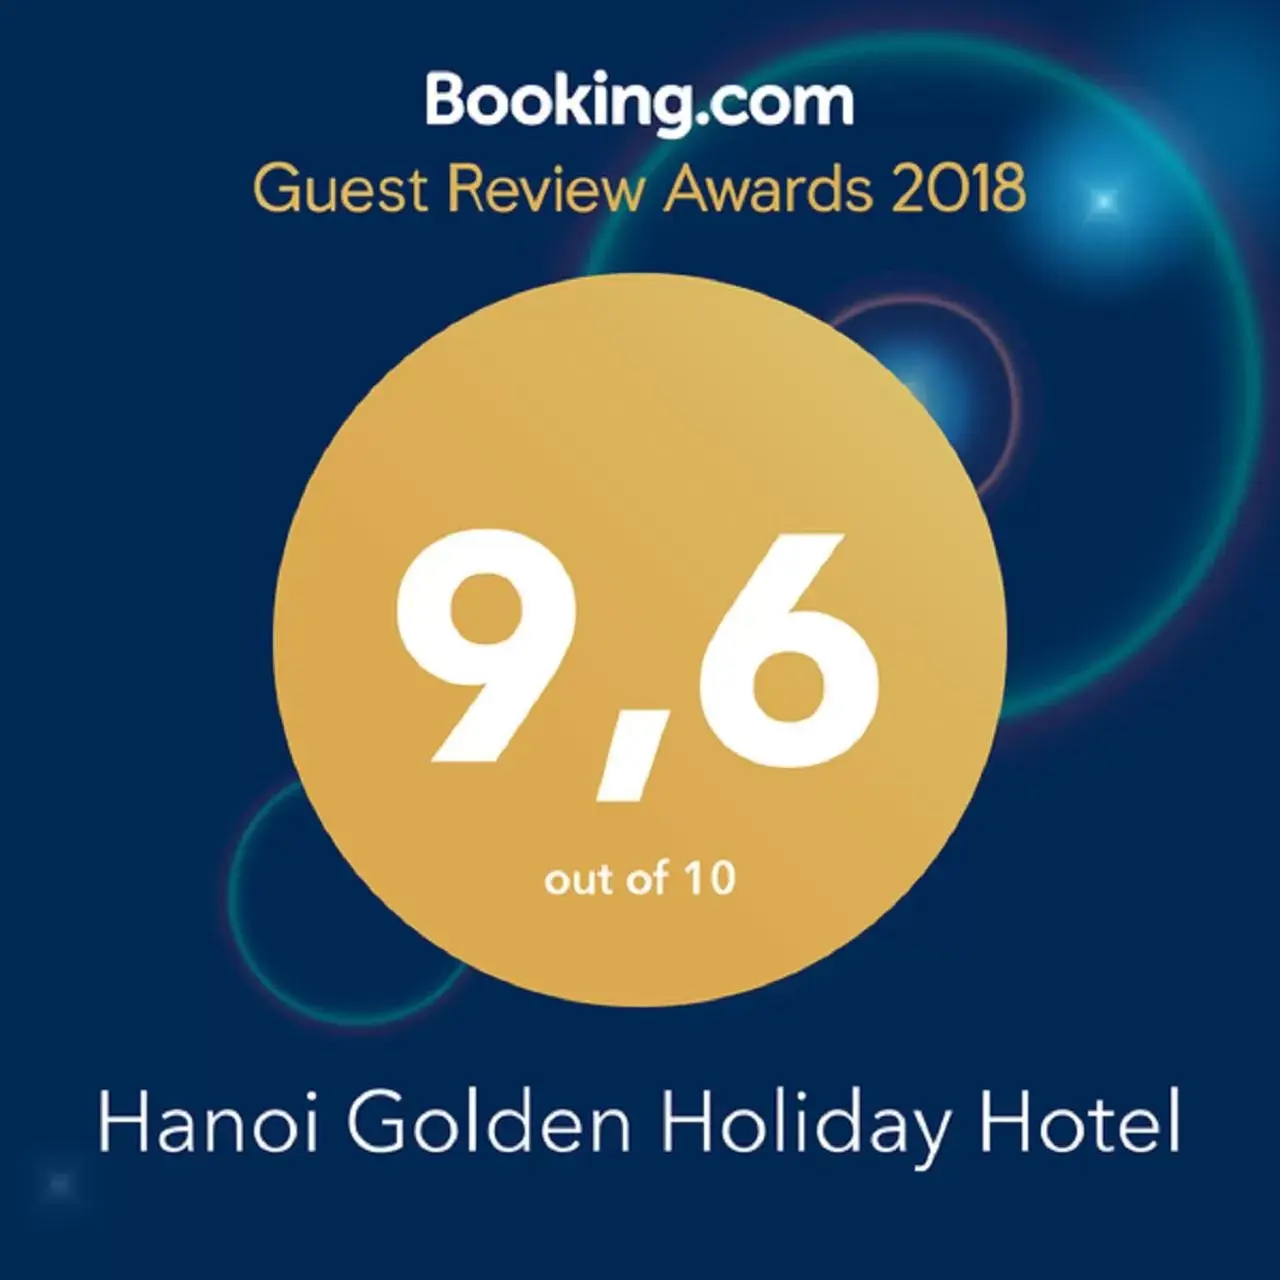 Certificate/Award in Hanoi Golden Holiday Hotel